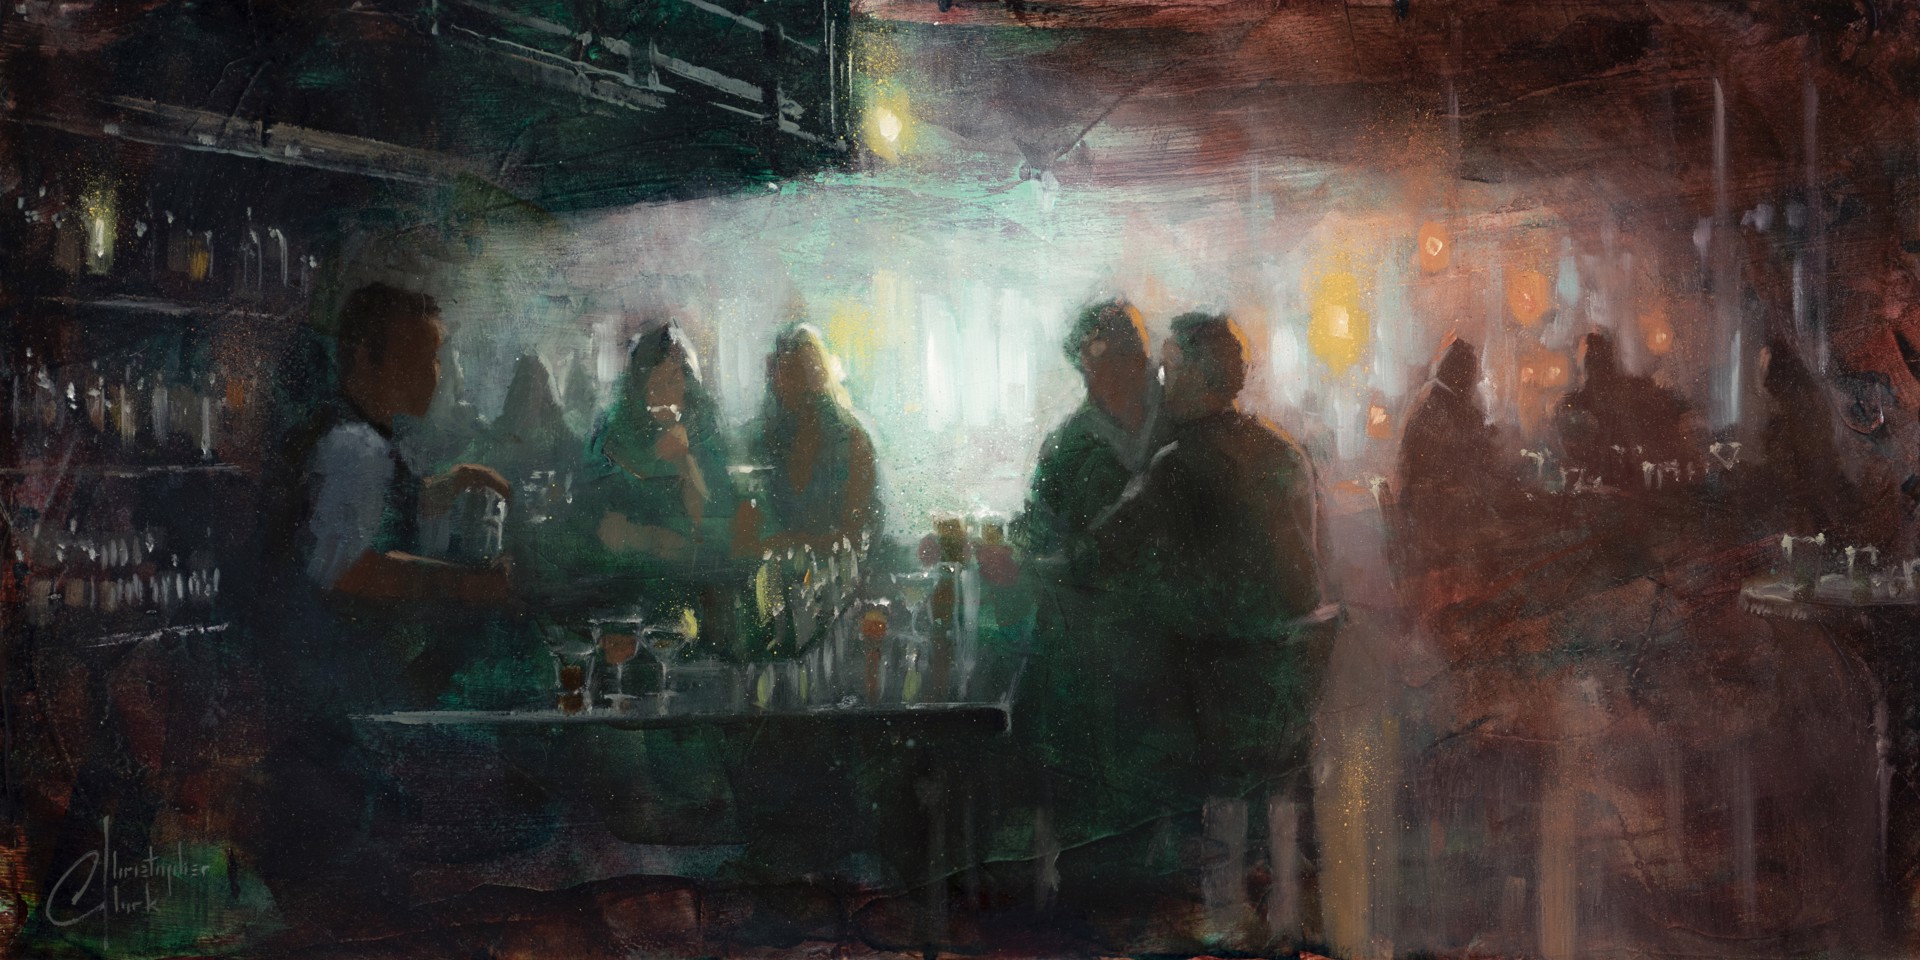 Night Bar by Christopher Clark